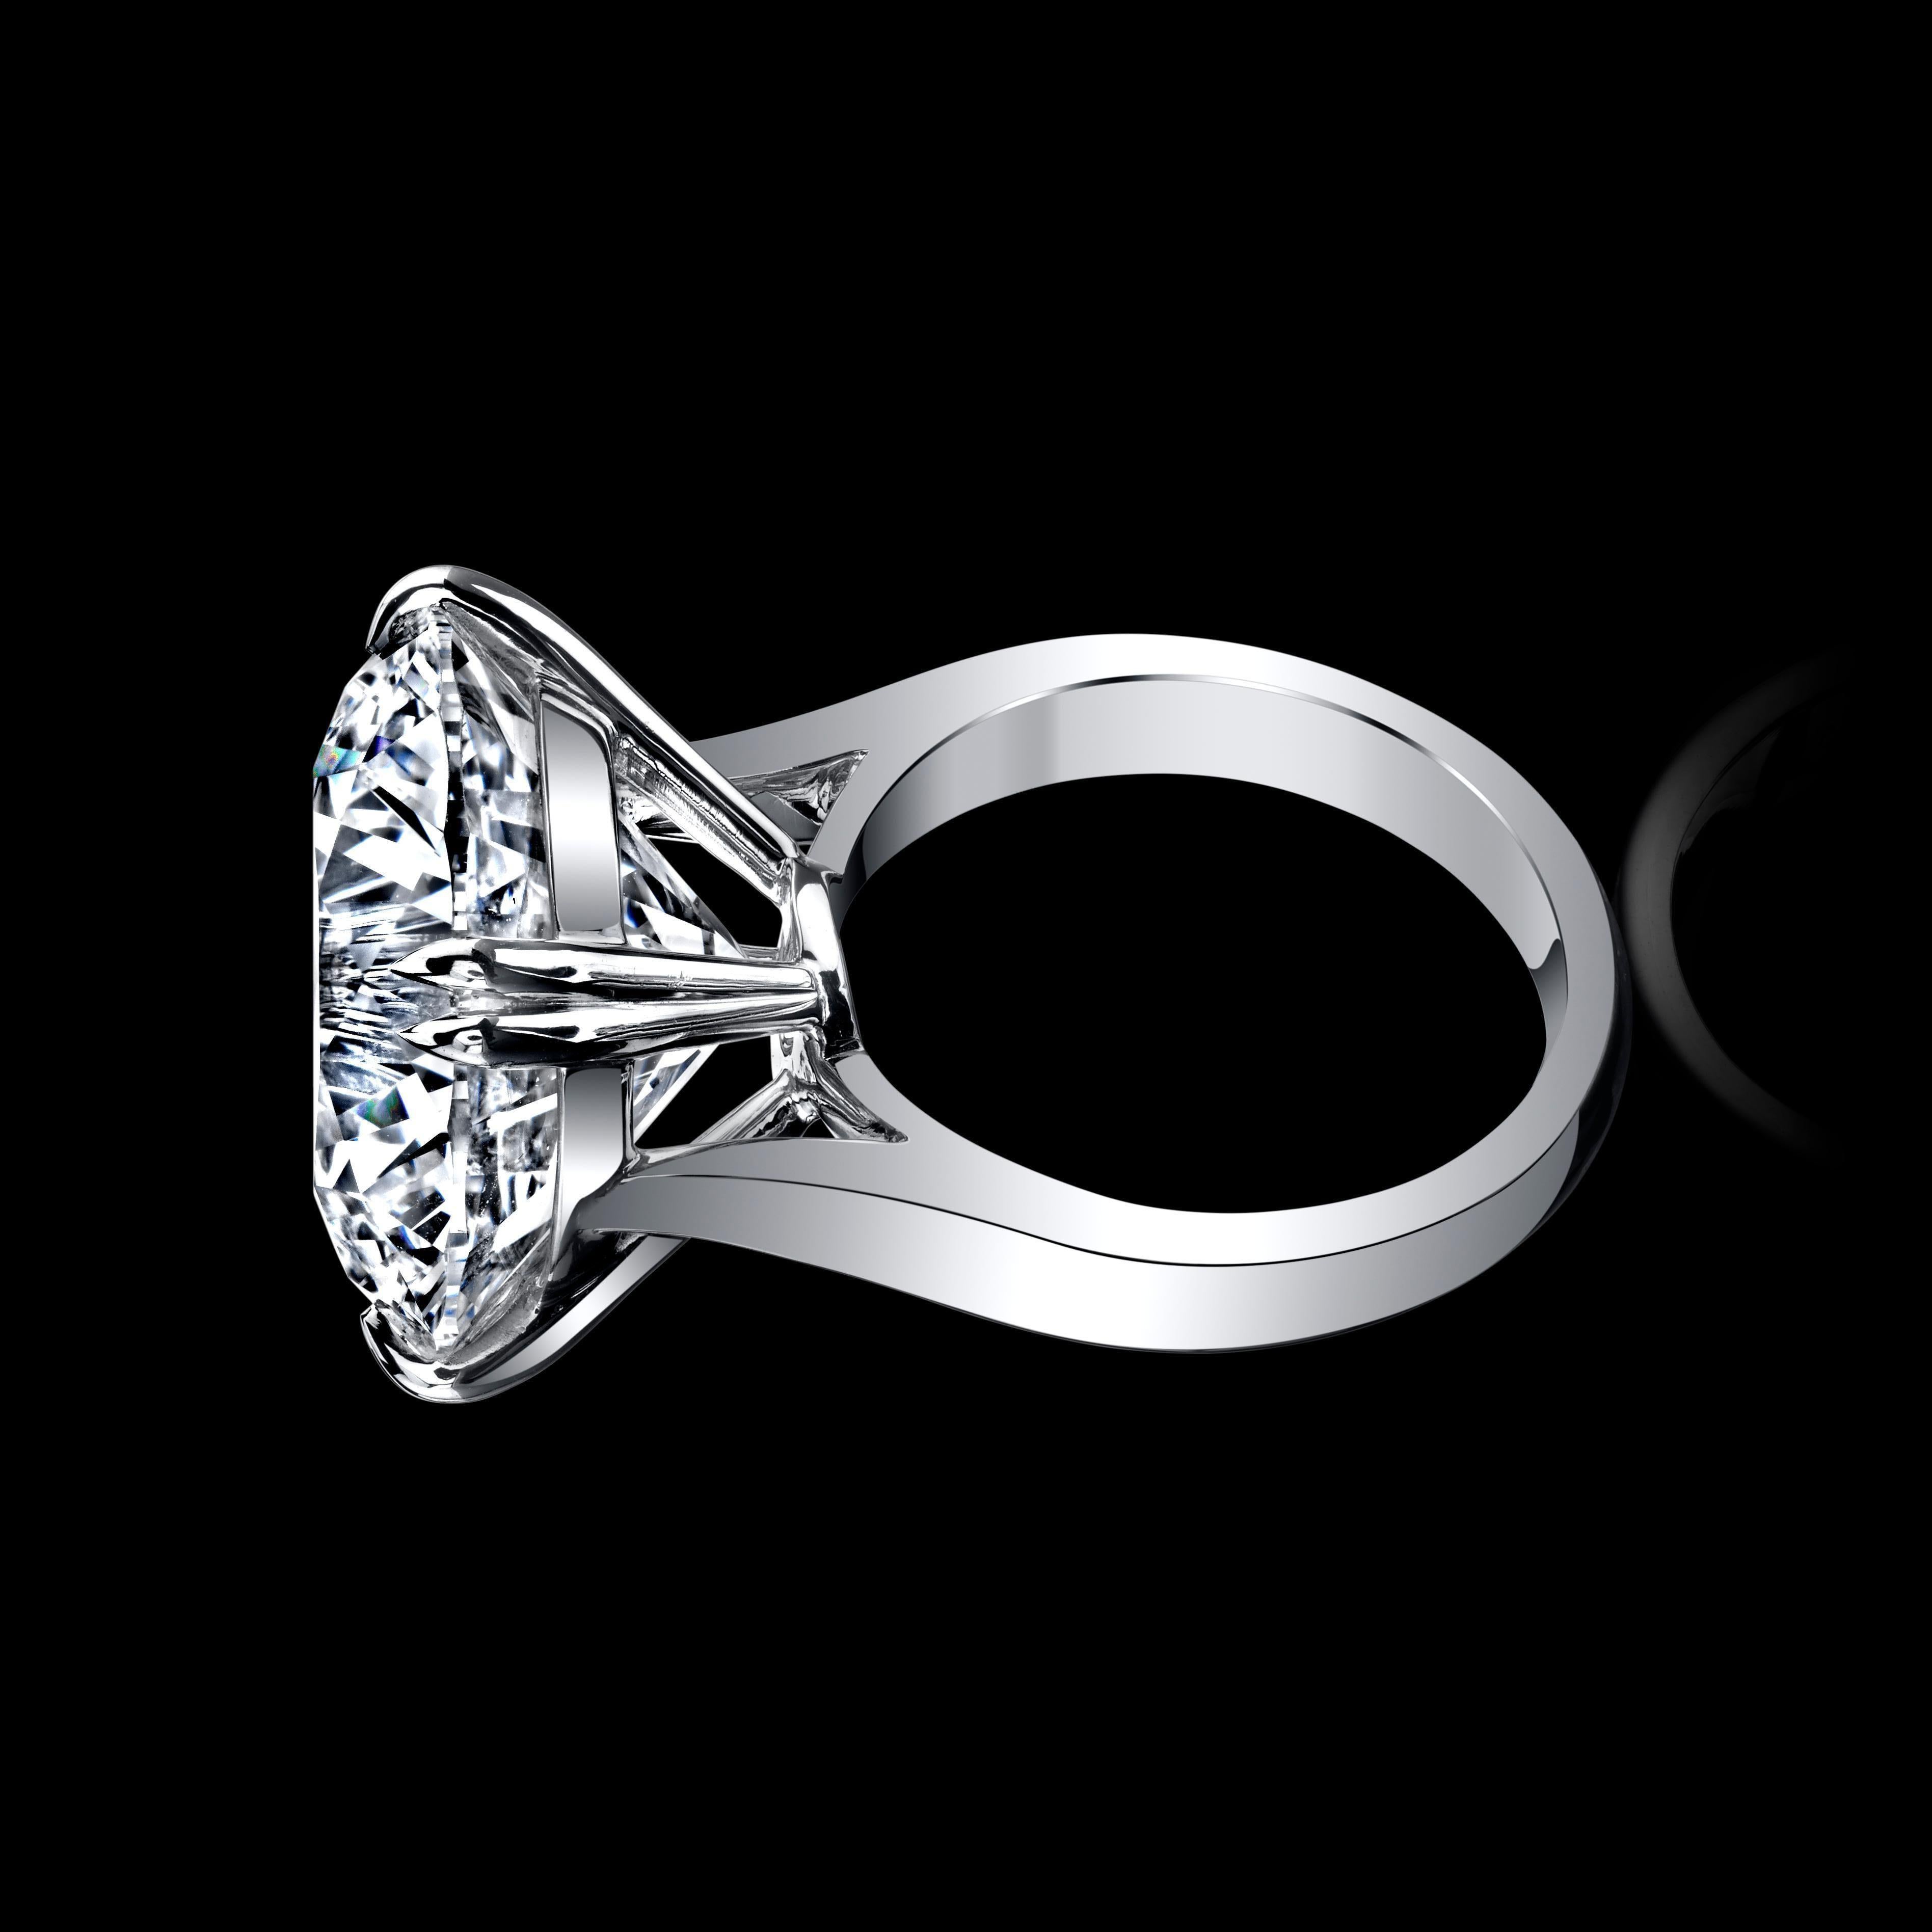 20 carat round diamond ring